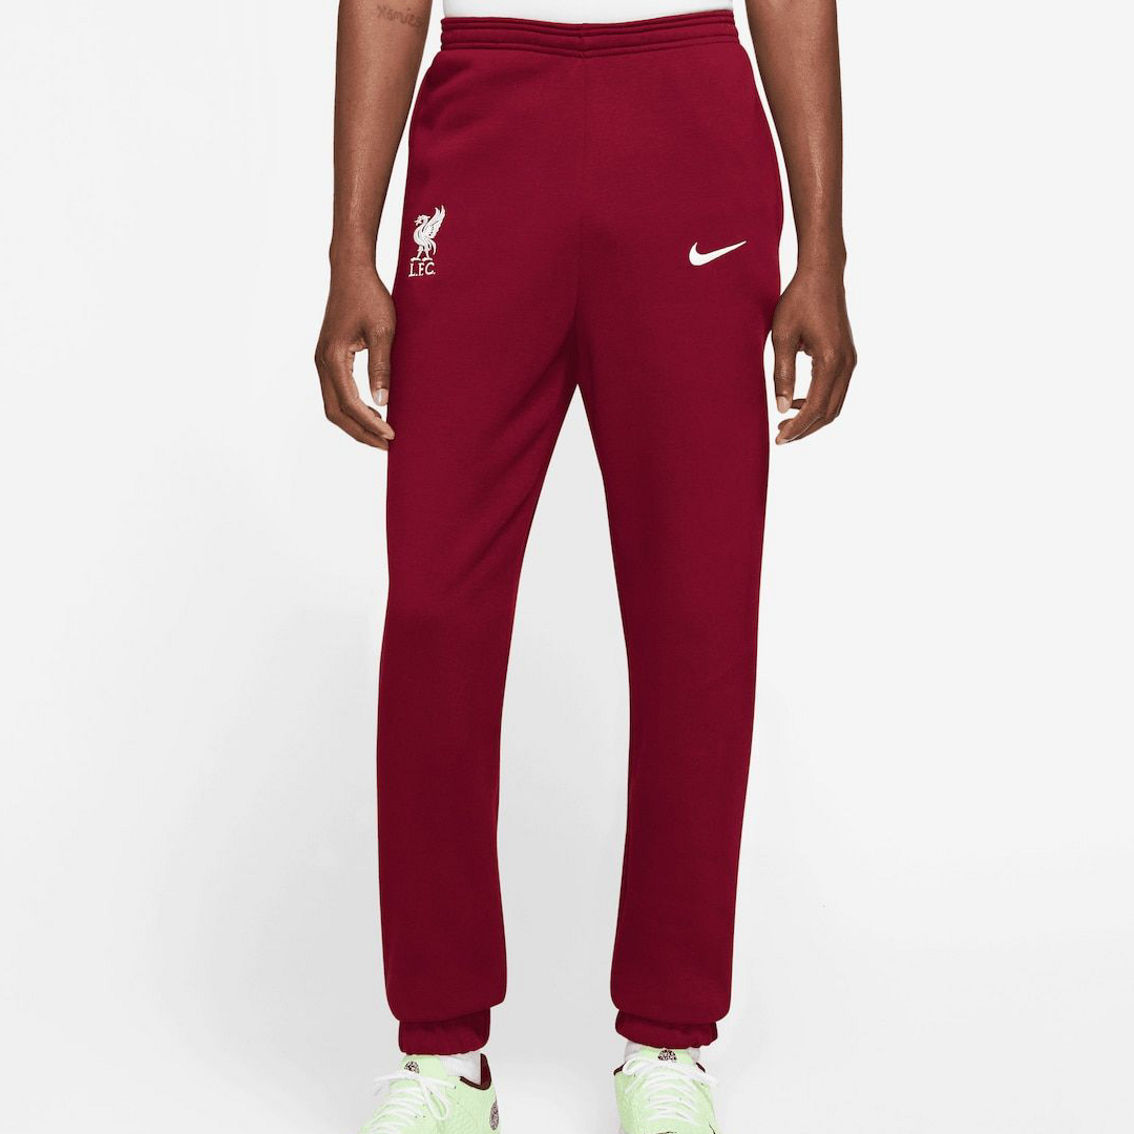 Nike Men's Red Liverpool Fleece Pants - Image 2 of 4